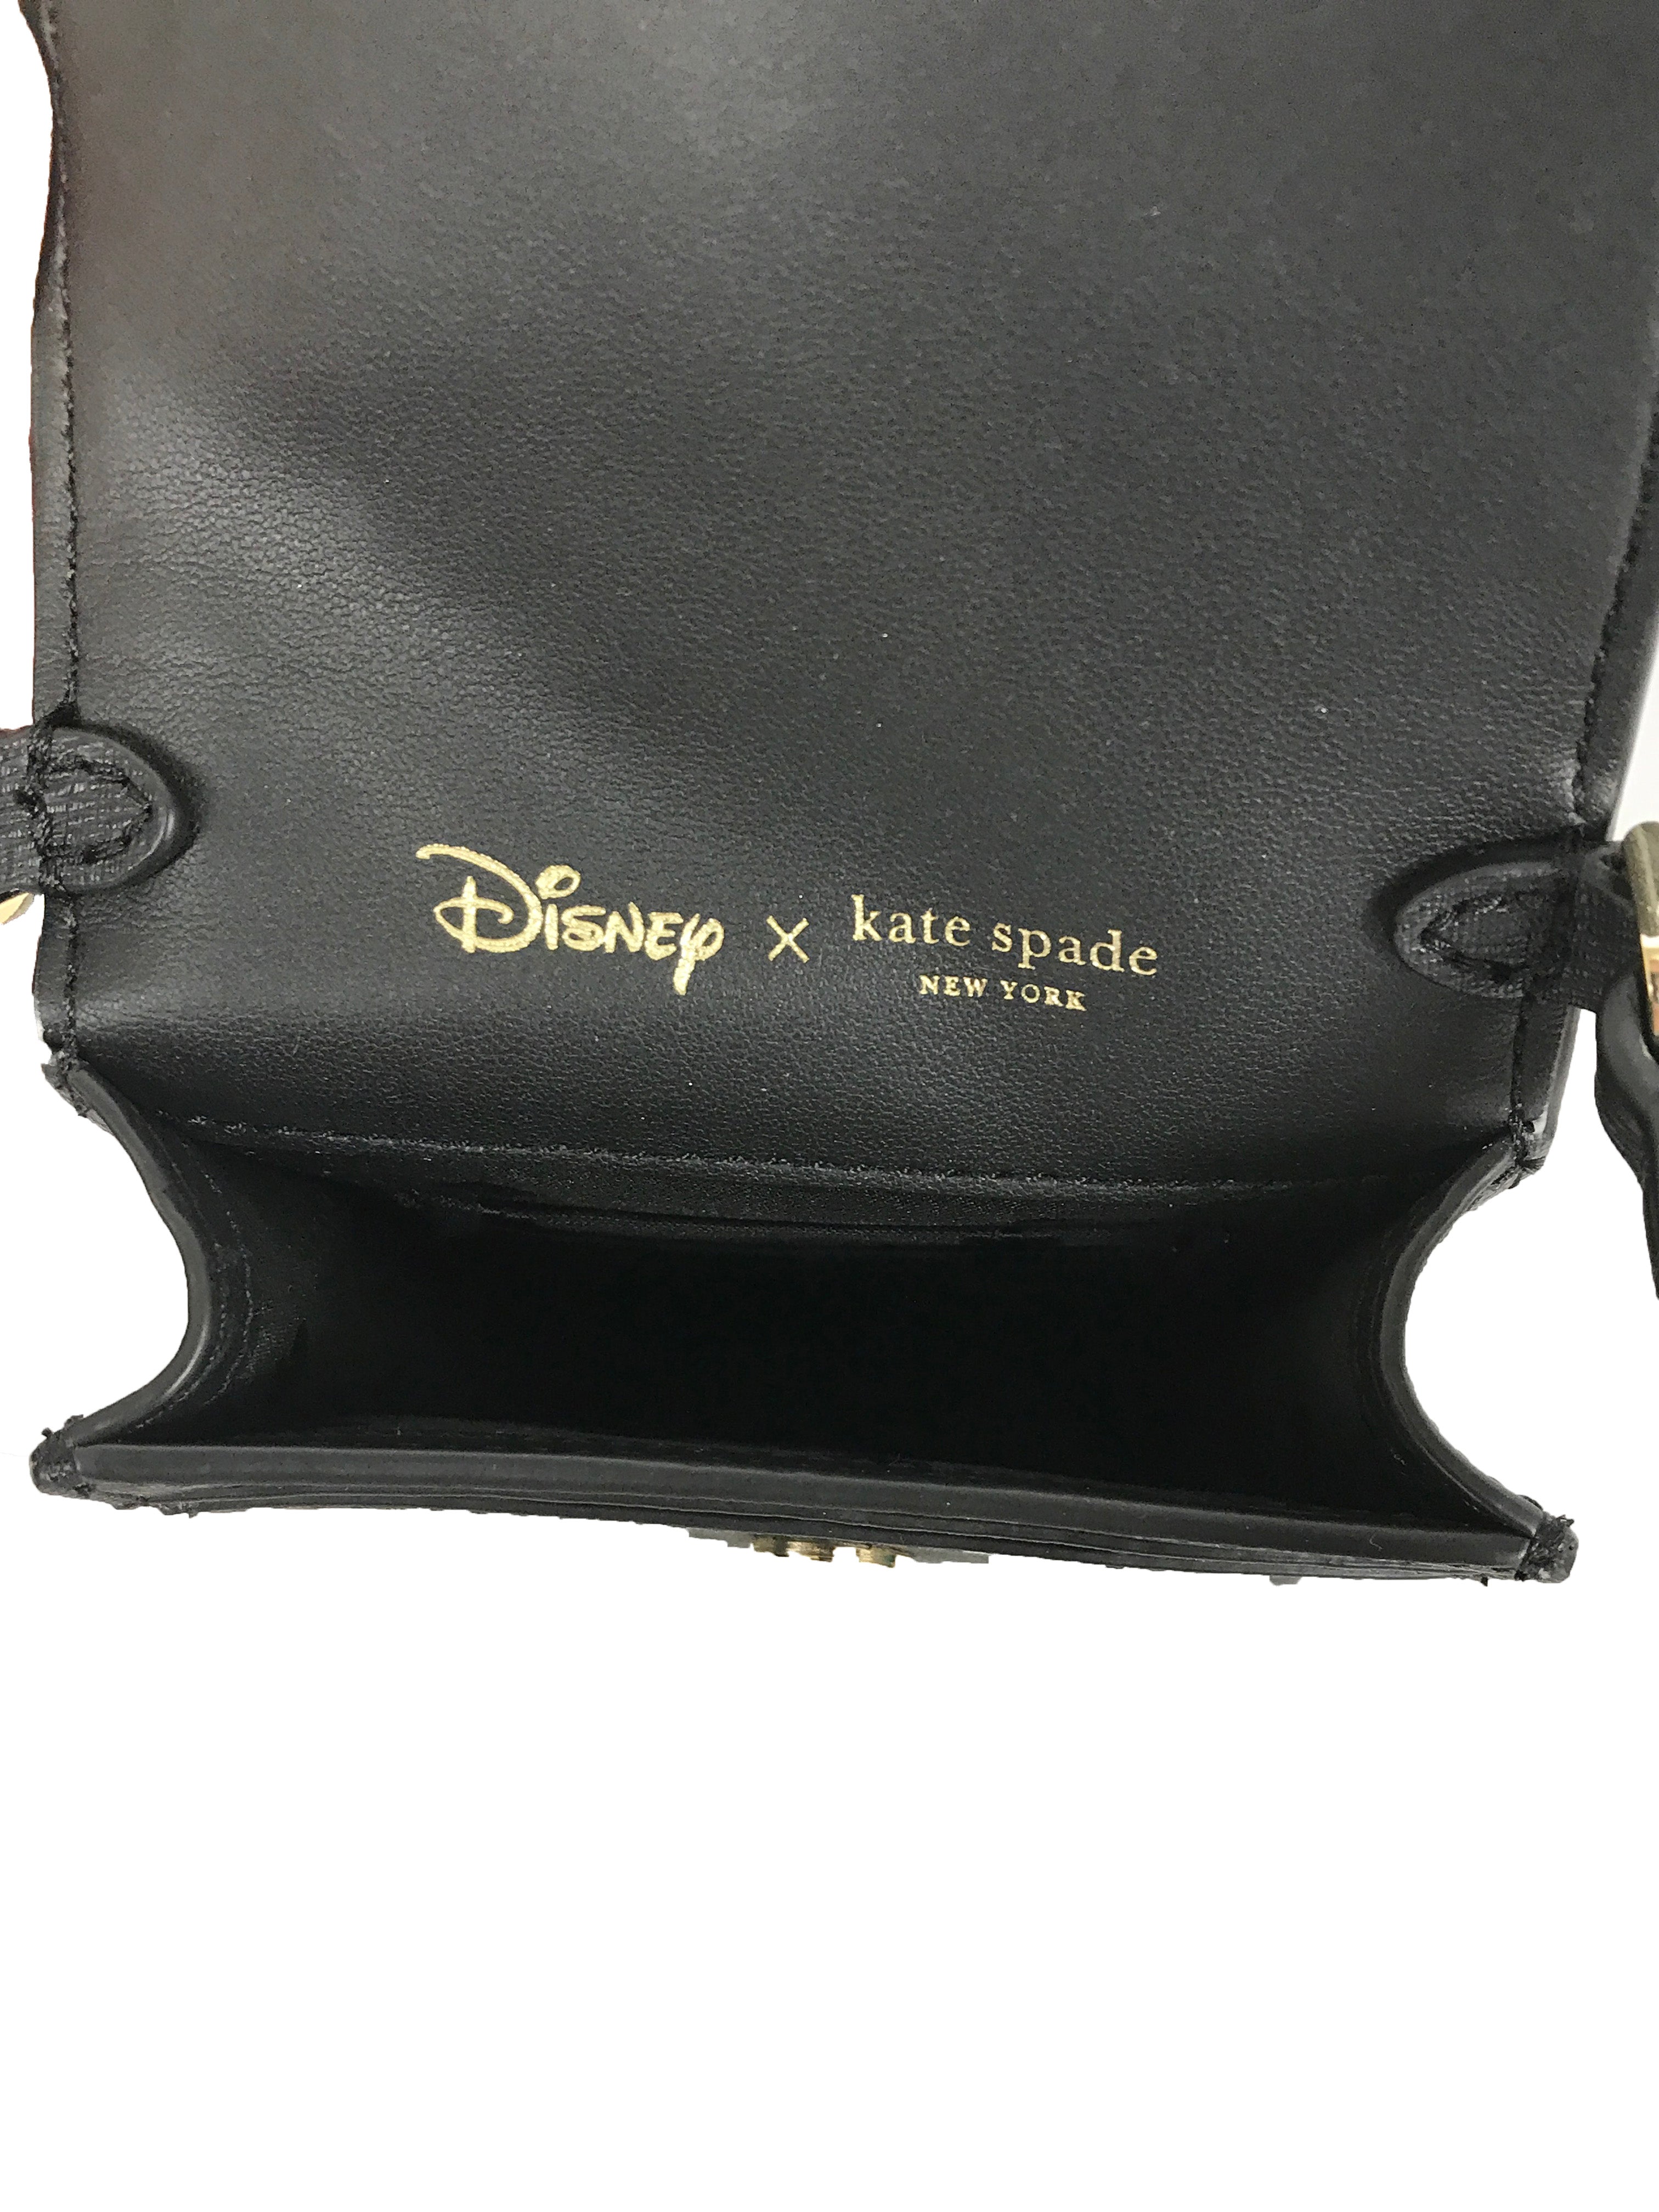 kate spade, Bags, Disney X Kate Spade New York Minnie Mouse Crossbody Bag  Black White Polka Dot